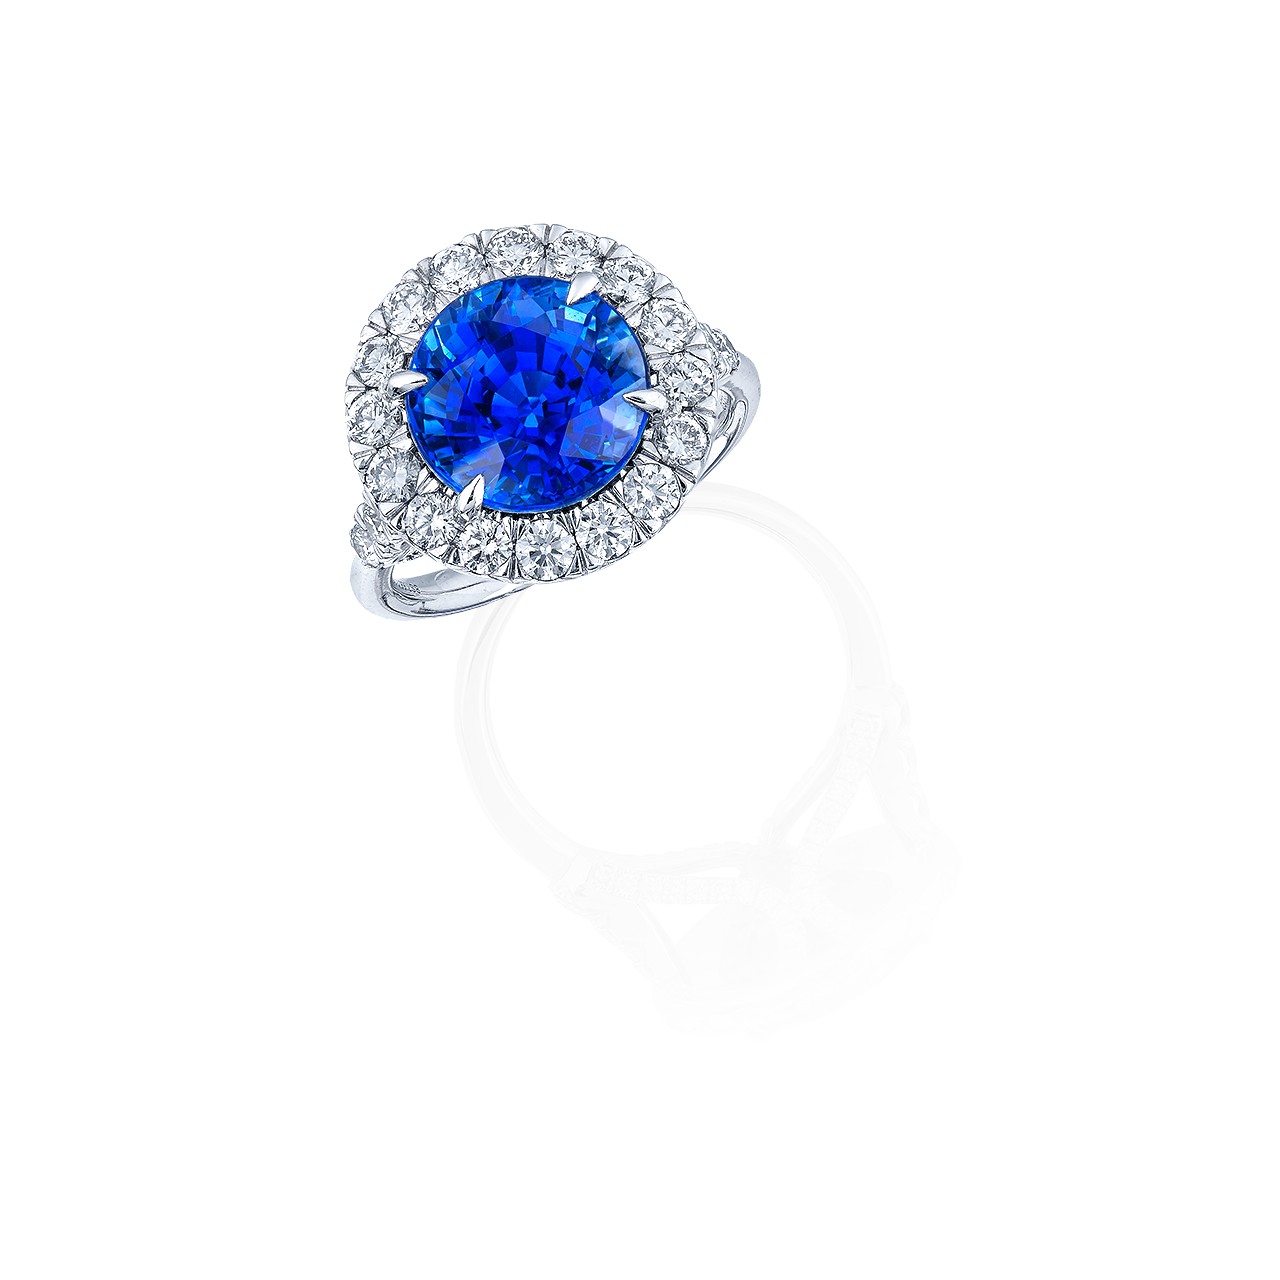 7.68 克拉 皇家藍藍寶石鑽戒
Royal Blue Sapphire and 
Diamond Ring